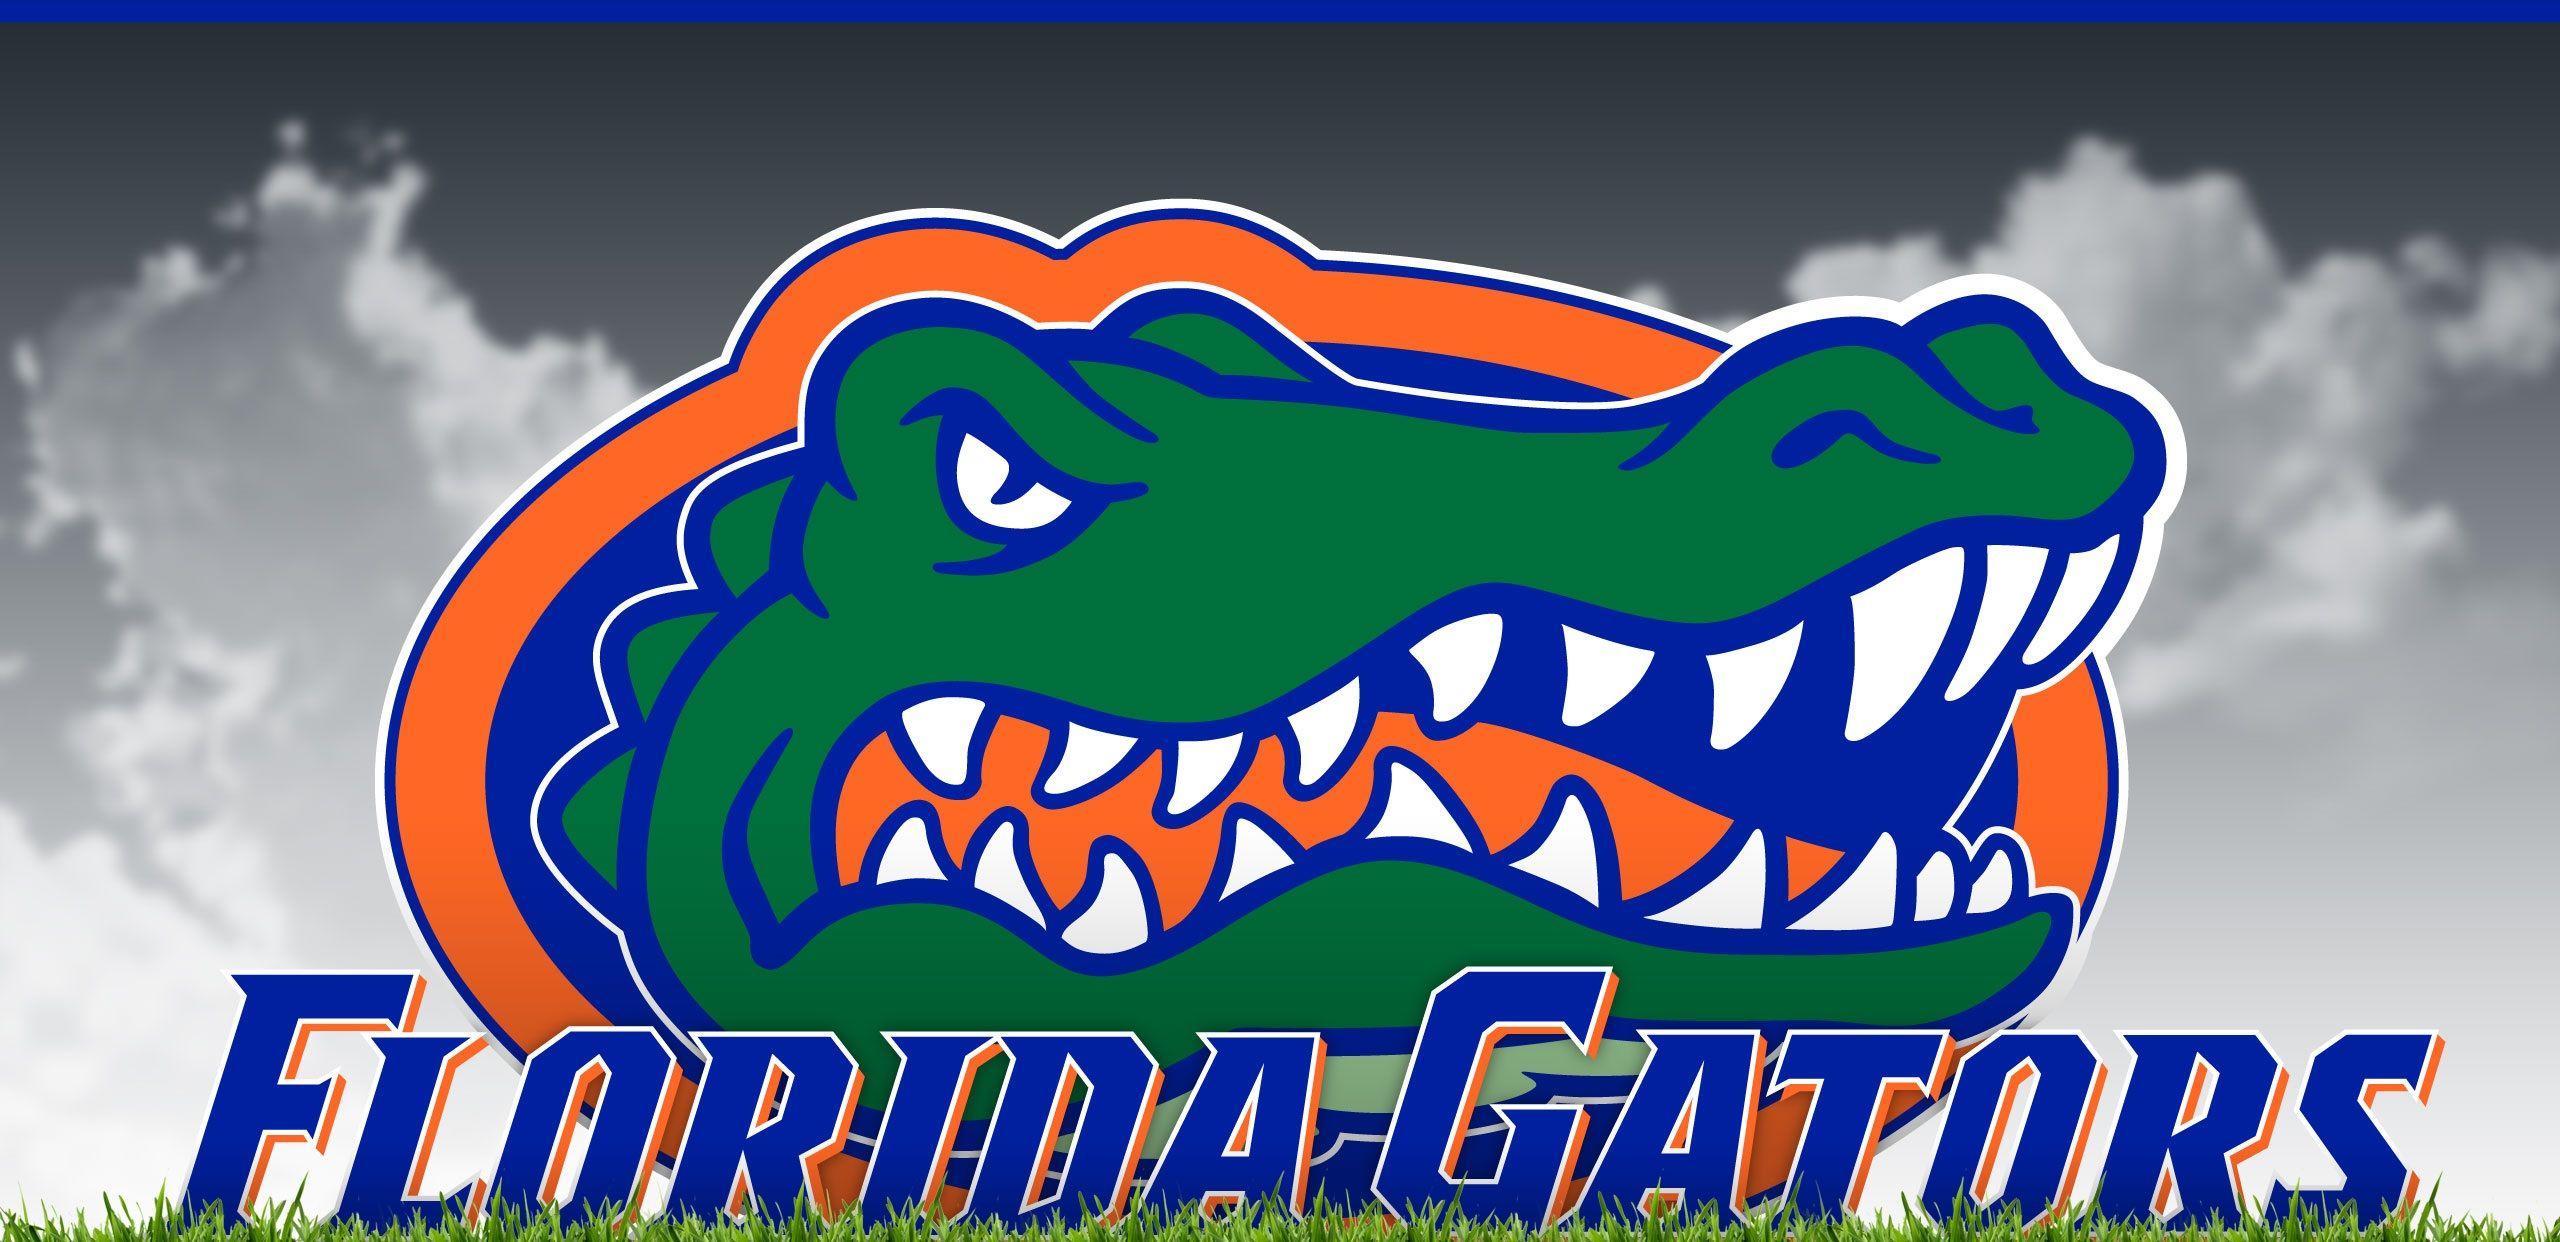 FL Gators Logo - Florida gators Logos